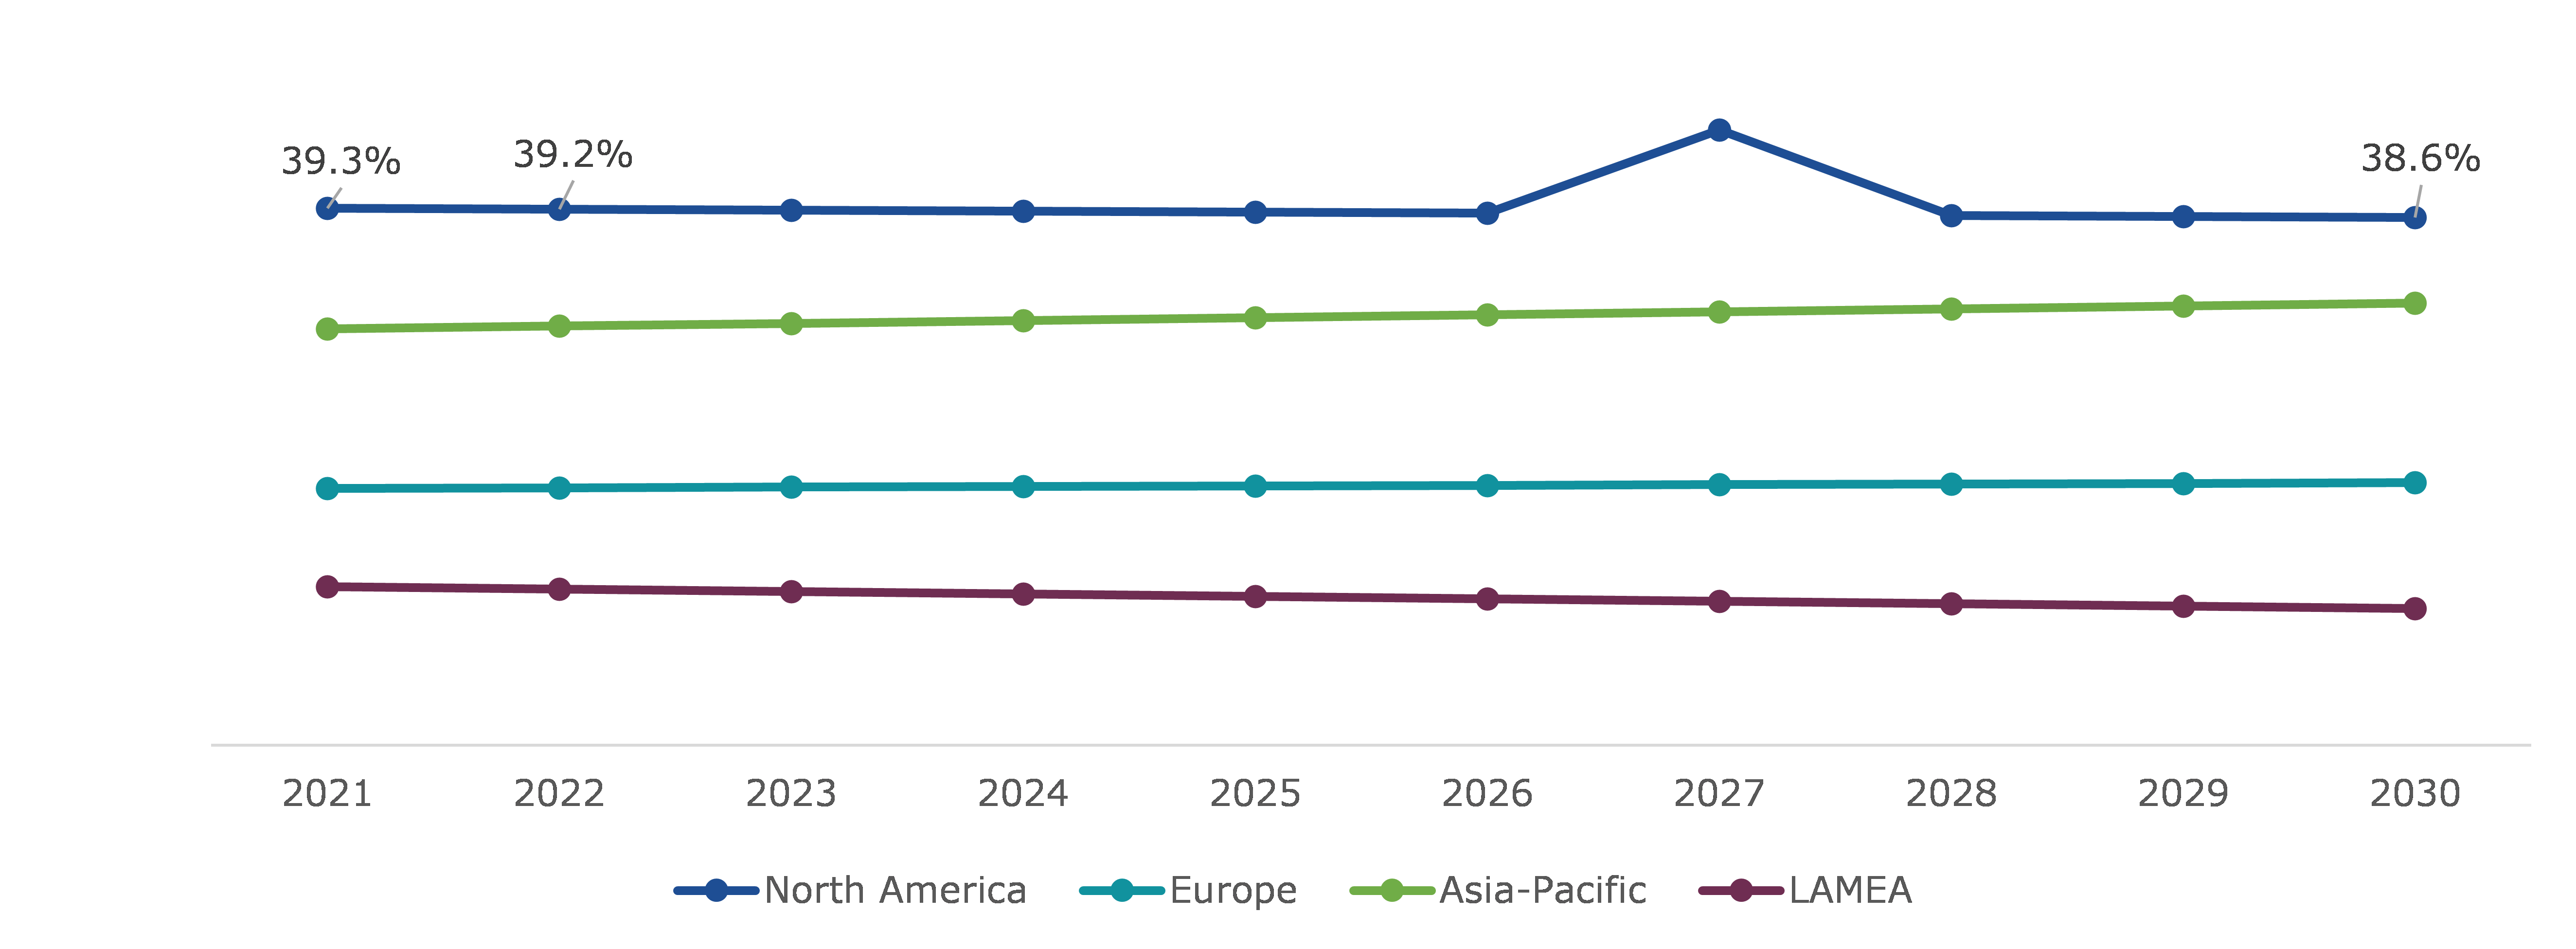 Global Edge AI Processor Market Size & Forecast, By Region, 2021-2030 (USD Million)	